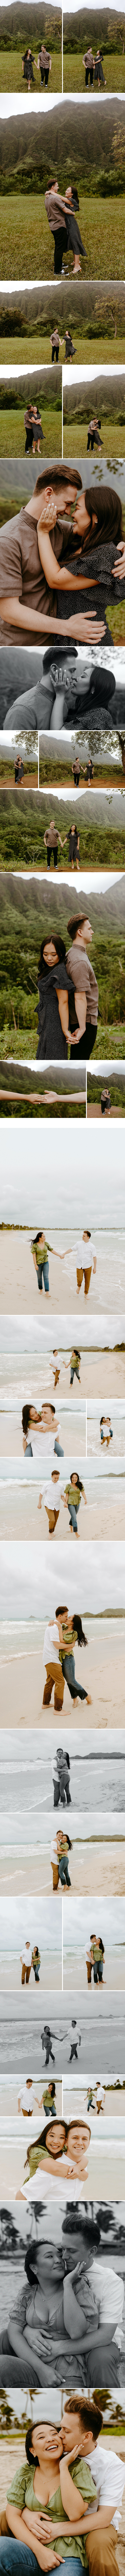 Oahu Engagement Photos